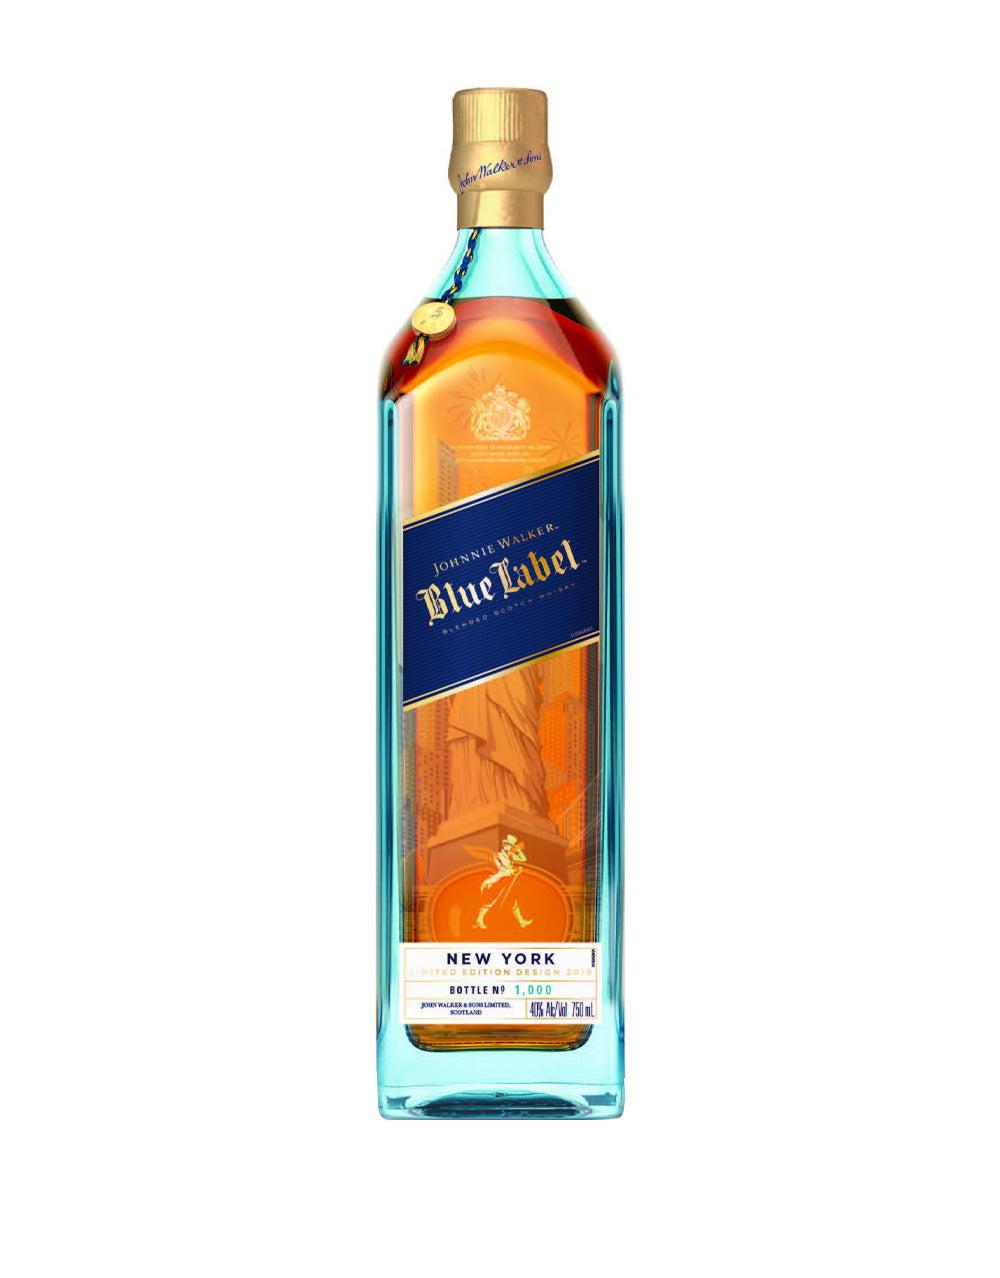 Johnnie Walker Blue Label Blended Scotch Whisky, New York Edition